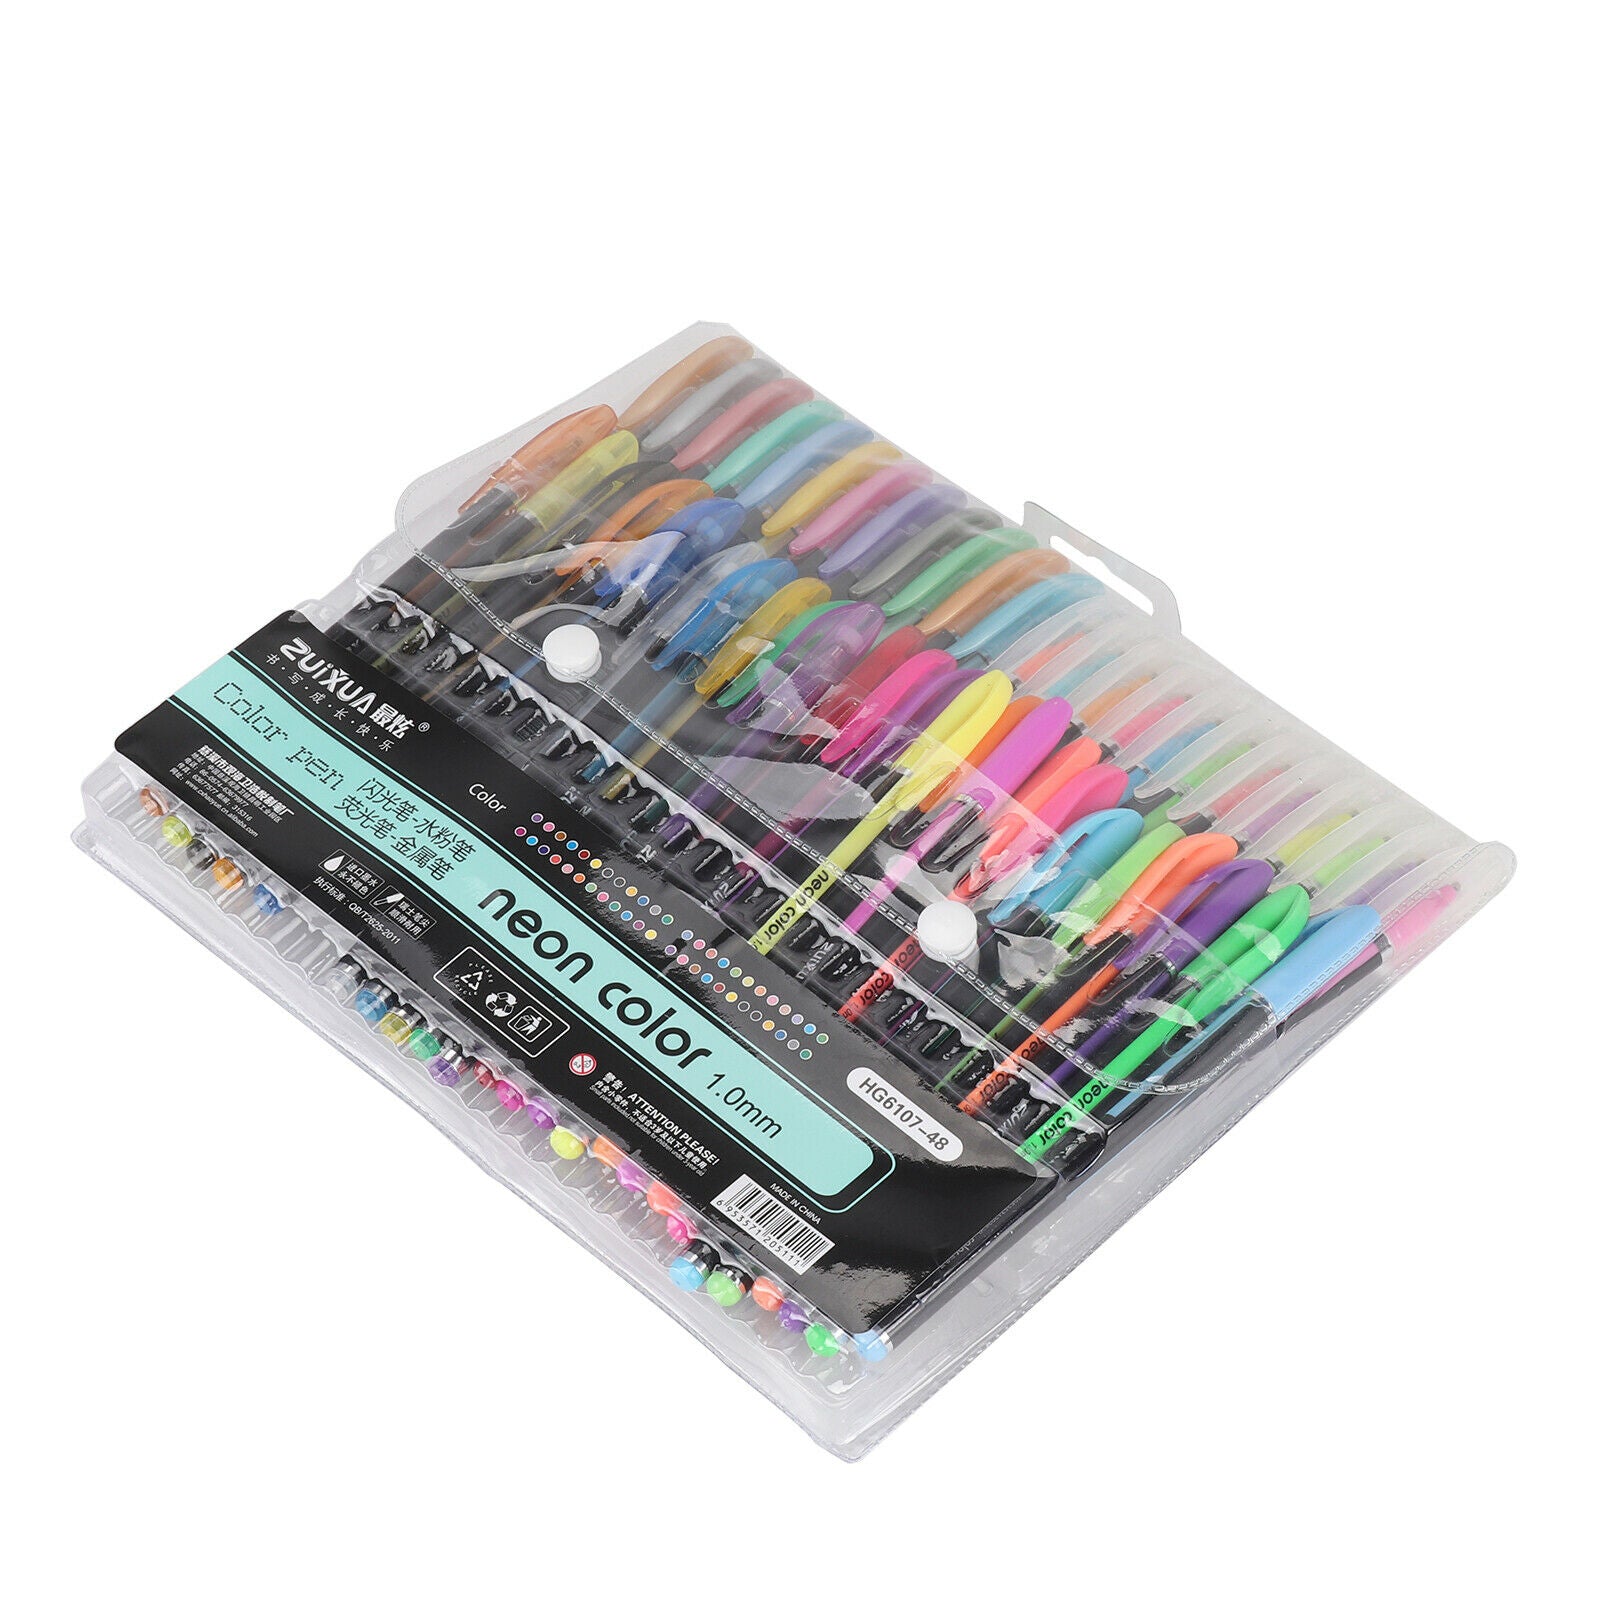 Gel Pens Set, 48 Pieces, Gel Pens Coloring, Metallic Gel Pens, Pastel Gel  Pens, Neon Gel Pens, Glitter Gel Pens, Gel Pens, Gel Pens Coloring -   Finland